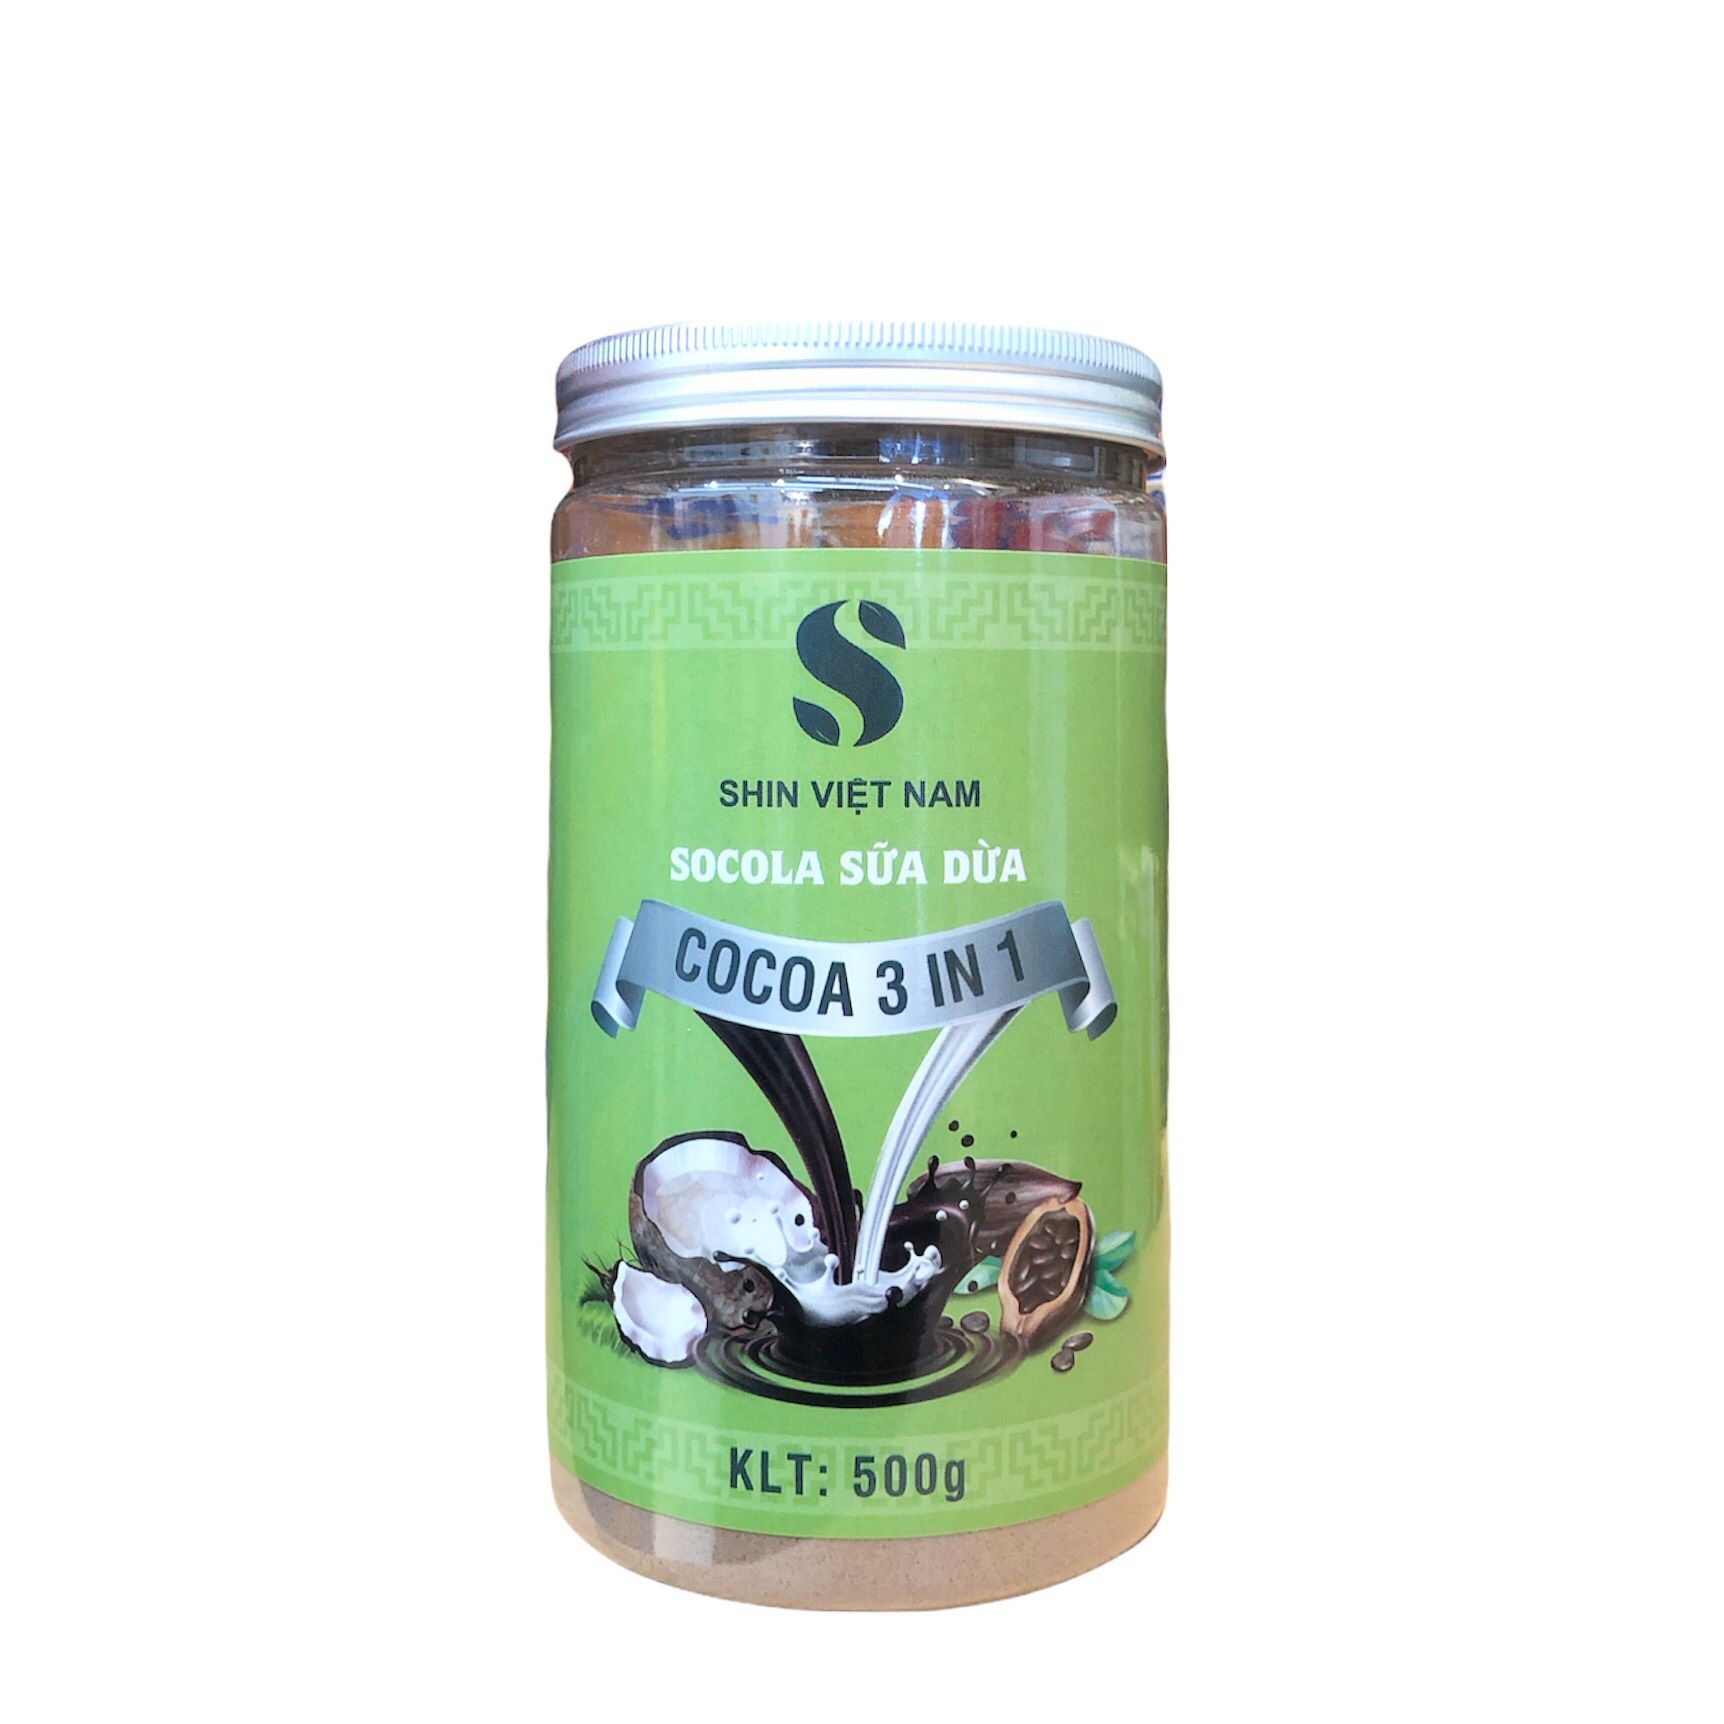  Bột Cacao SHIN Việt Nam socola sữa dừa 500g 